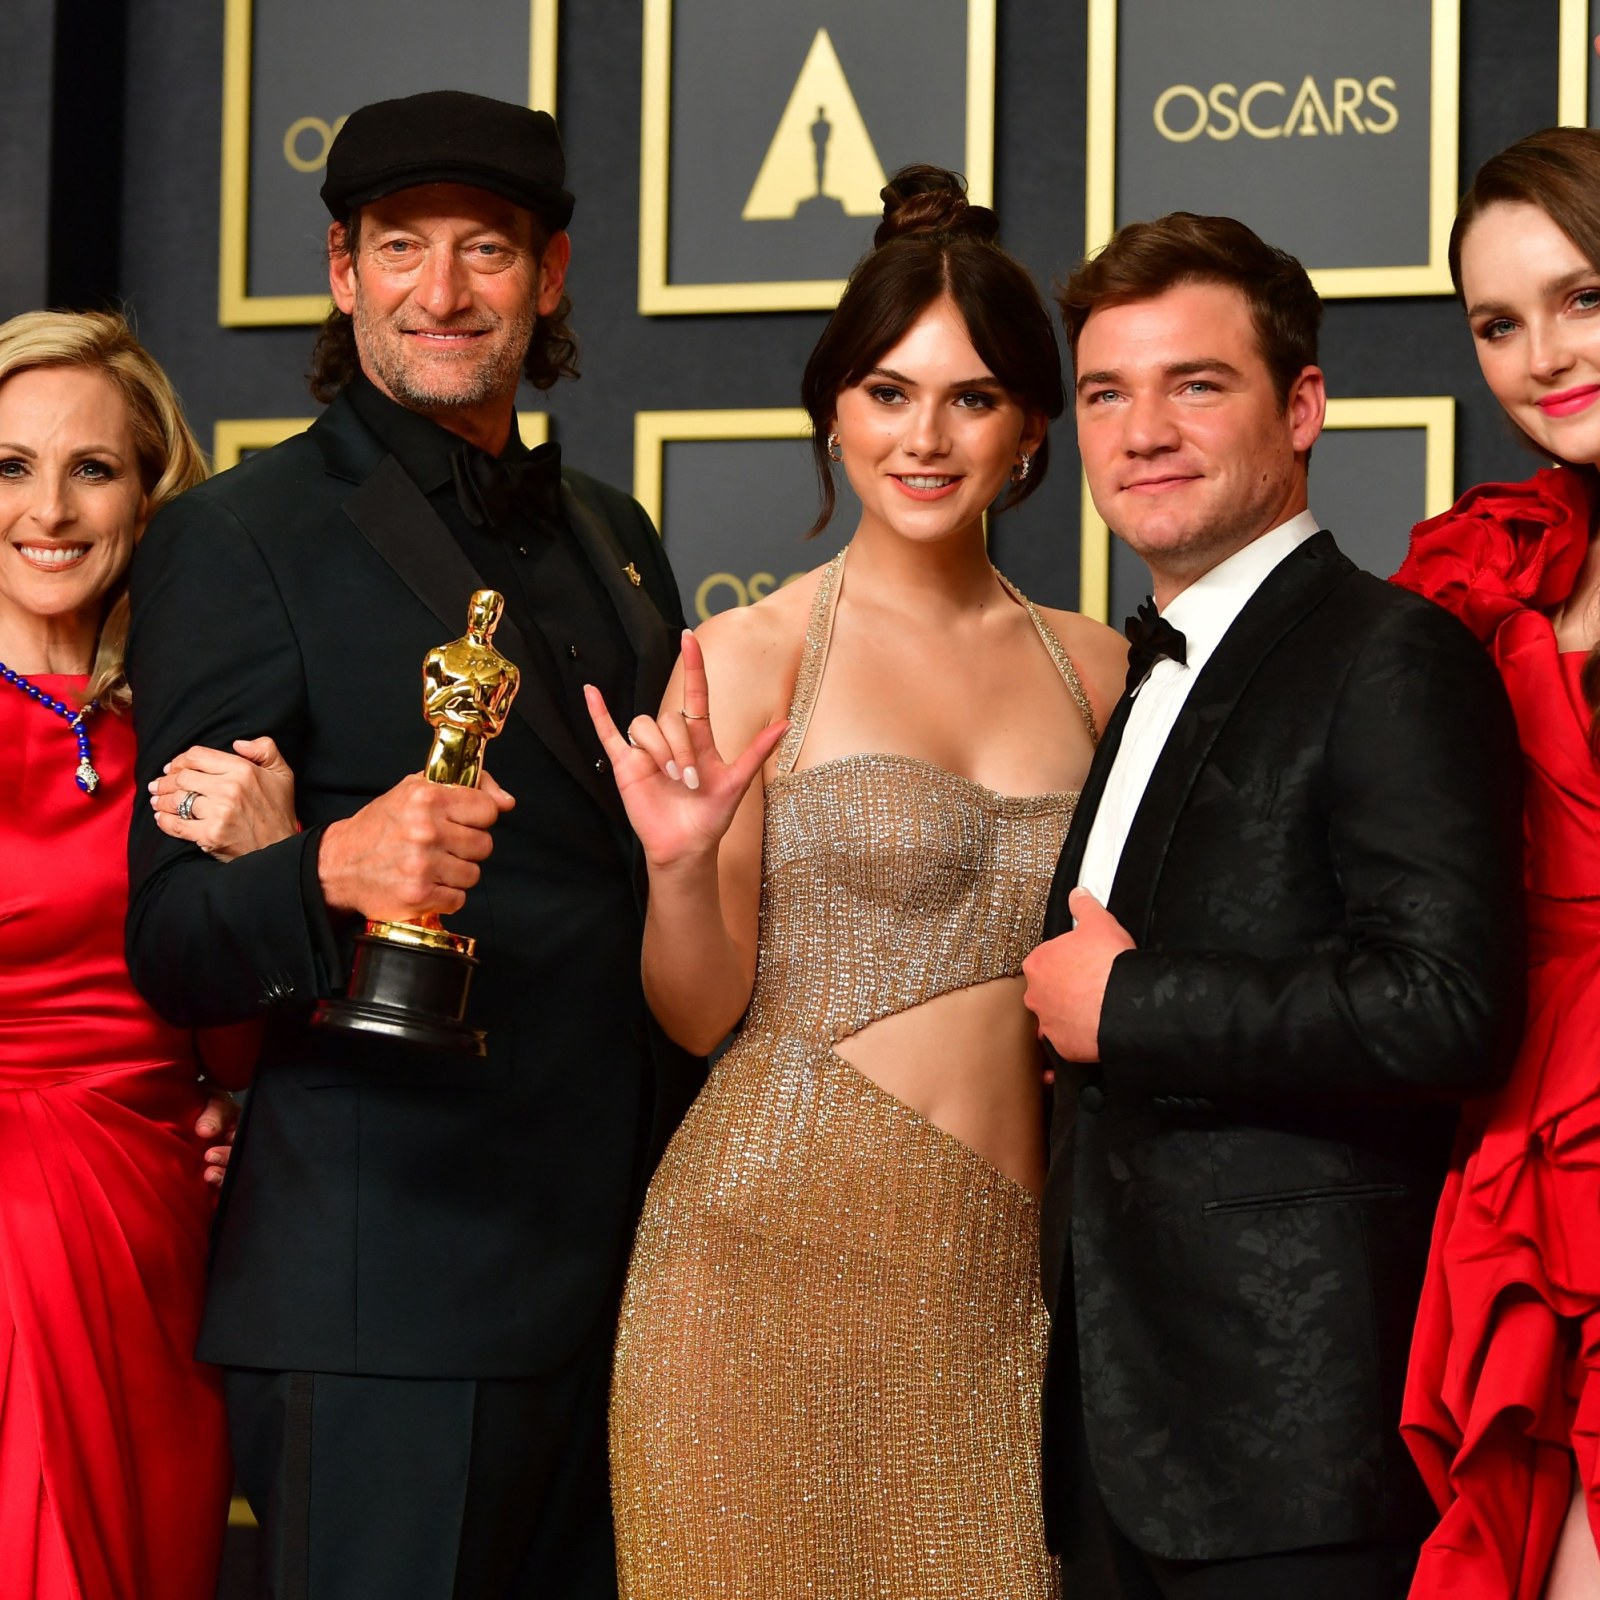 Academy Awards 2022: Full List of Oscars Winners From Will Smith to 'CODA'